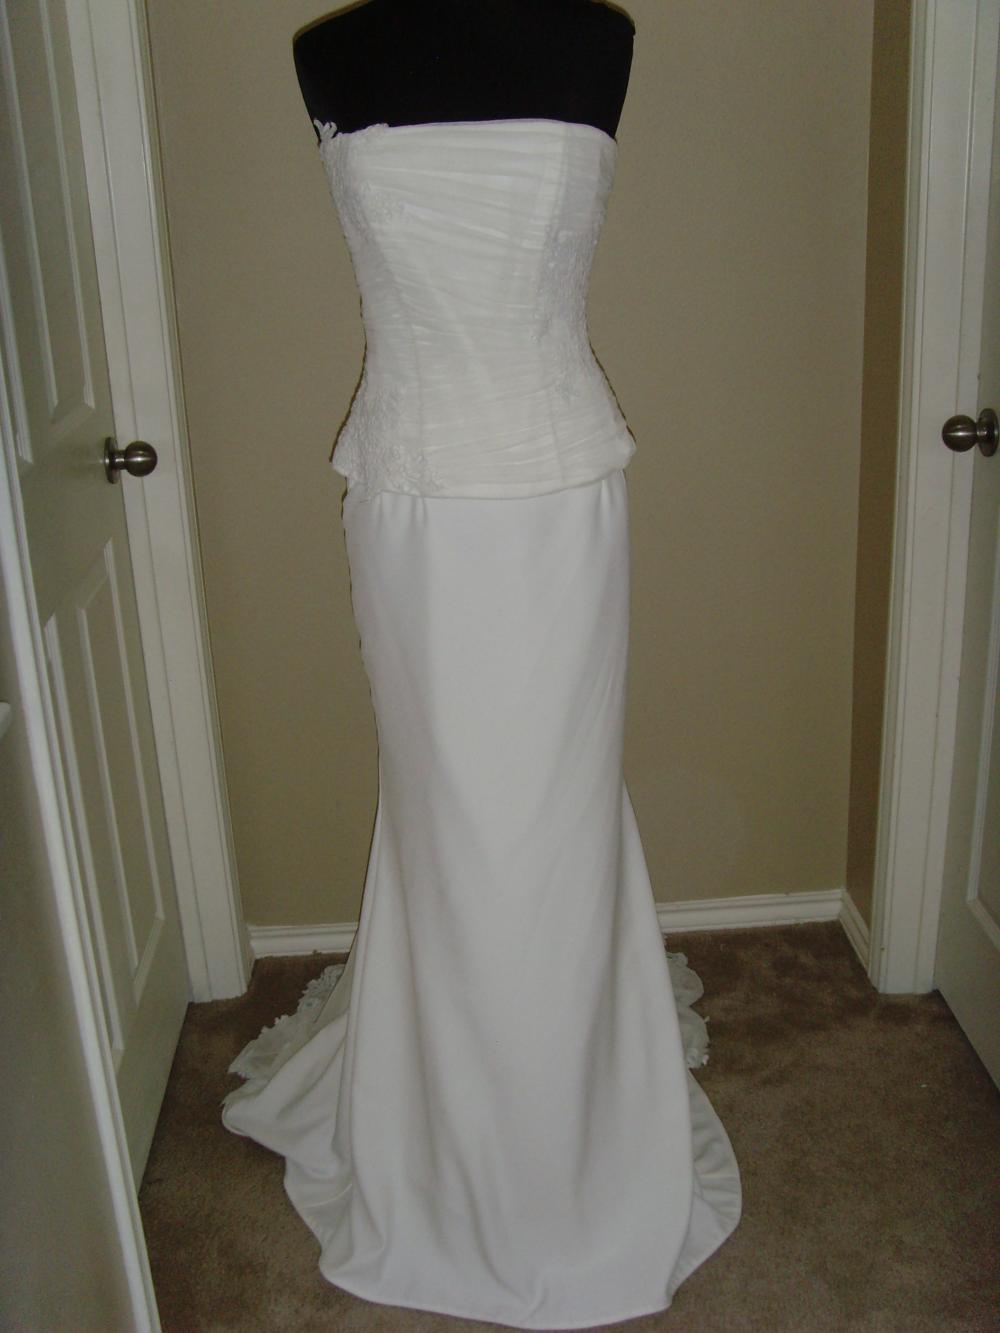 New Lambert Creations Ivory 2 Piece Wedding Dress Sz 10